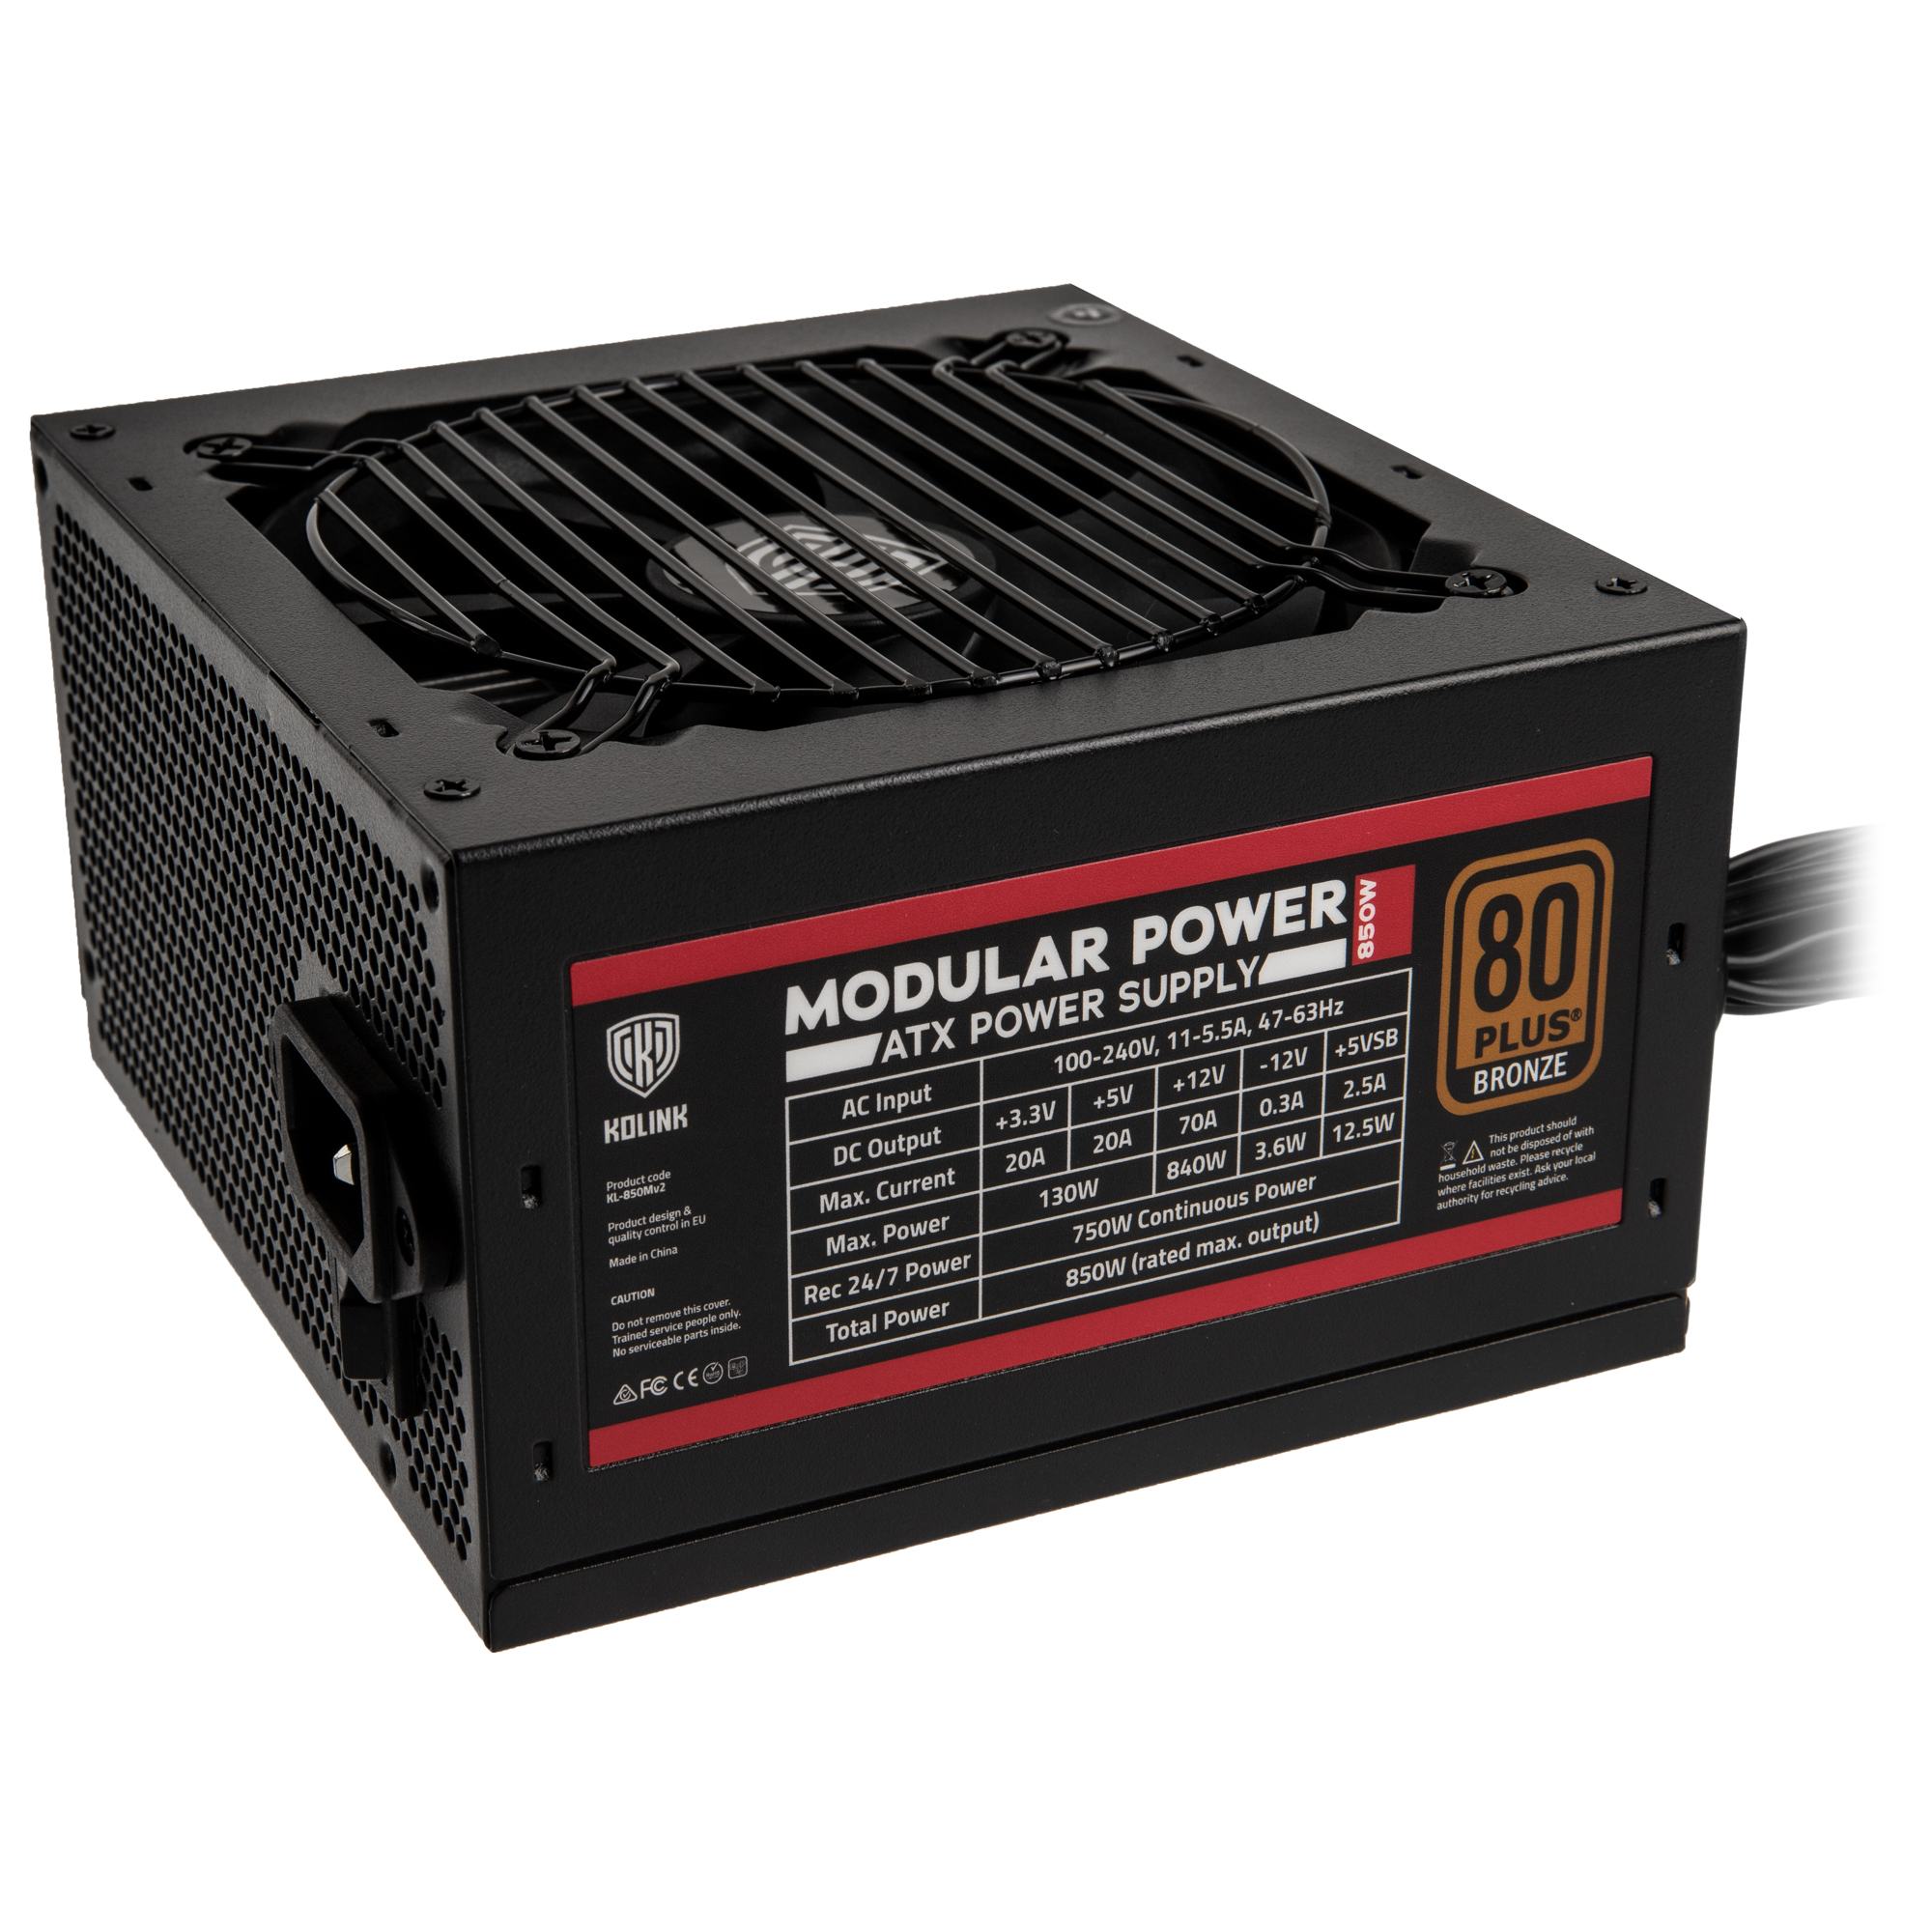 Kolink Modular Power 850W 80 Plus Bronze Modular Power Supply